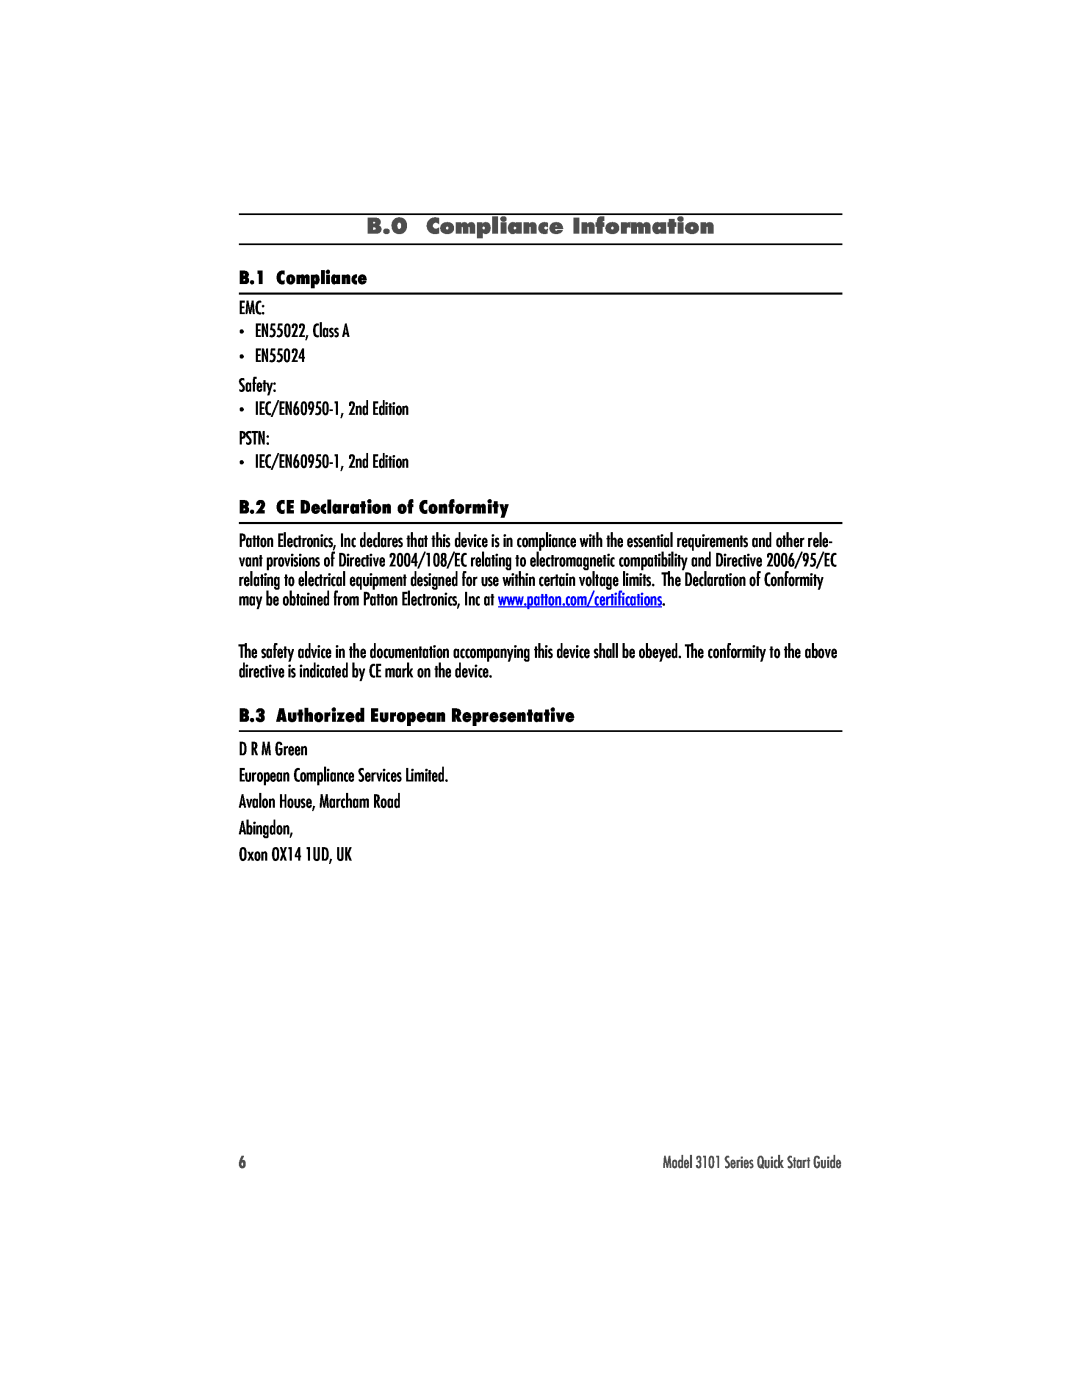 Patton electronic 3101 quick start B.0 Compliance Information, B.1 Compliance, IEC/EN60950-1, 2nd Edition 